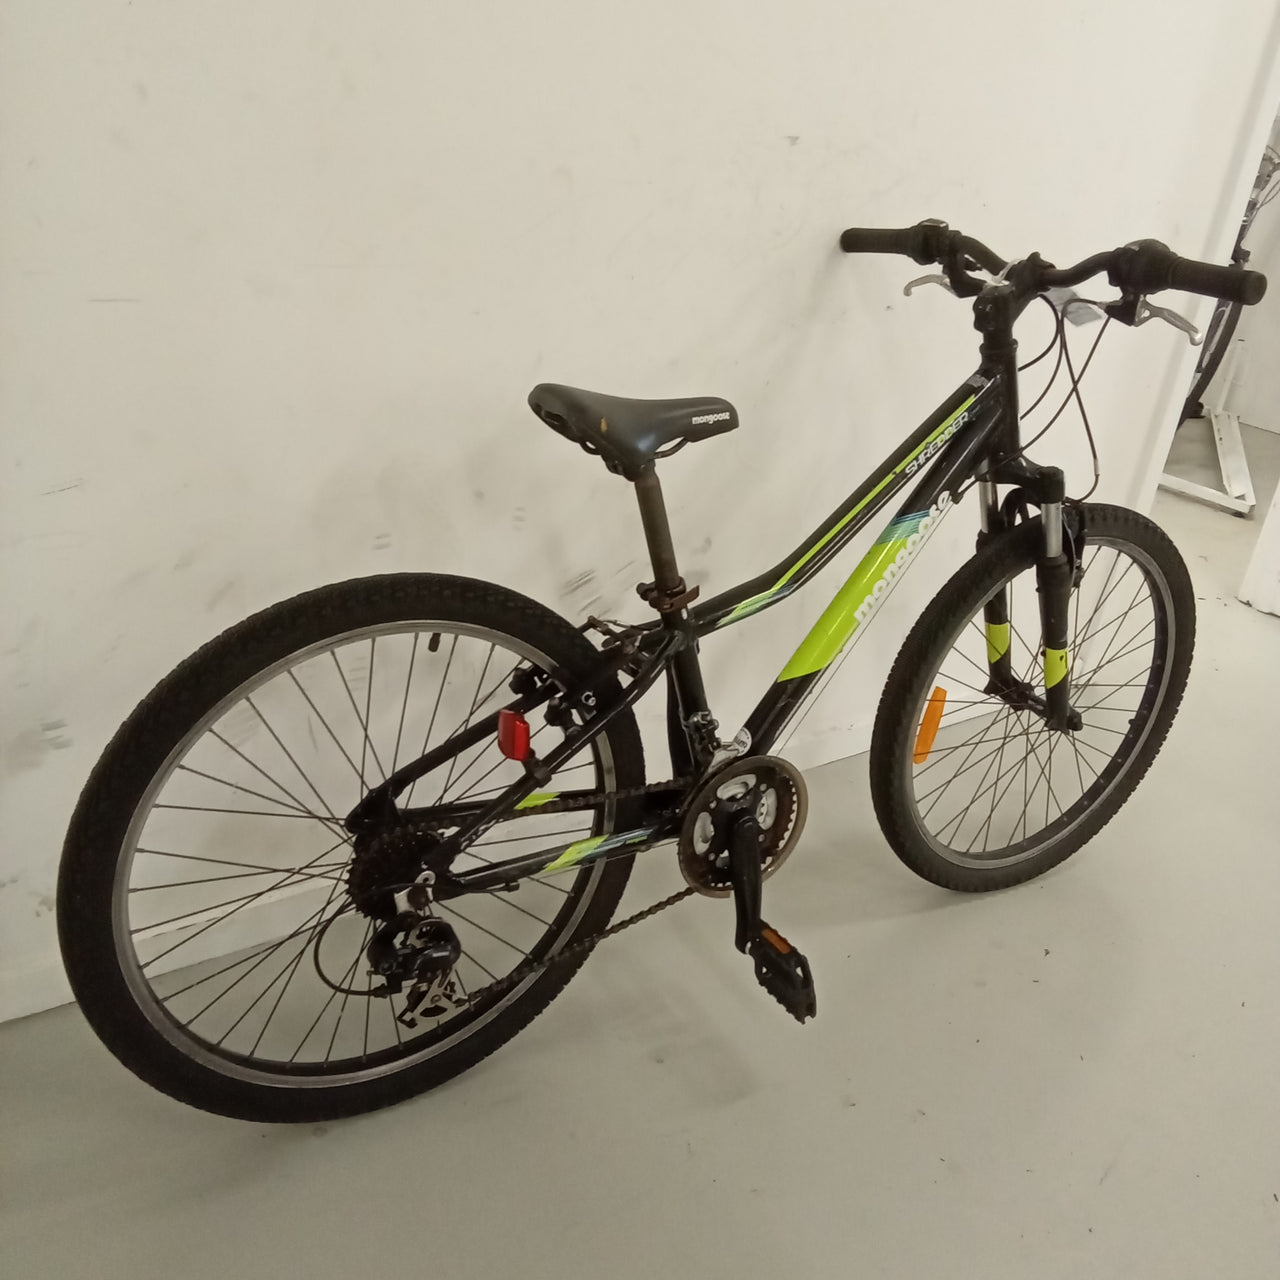 1627 - 24" Black,
Green, Mountain Bike,
Kids, Bike